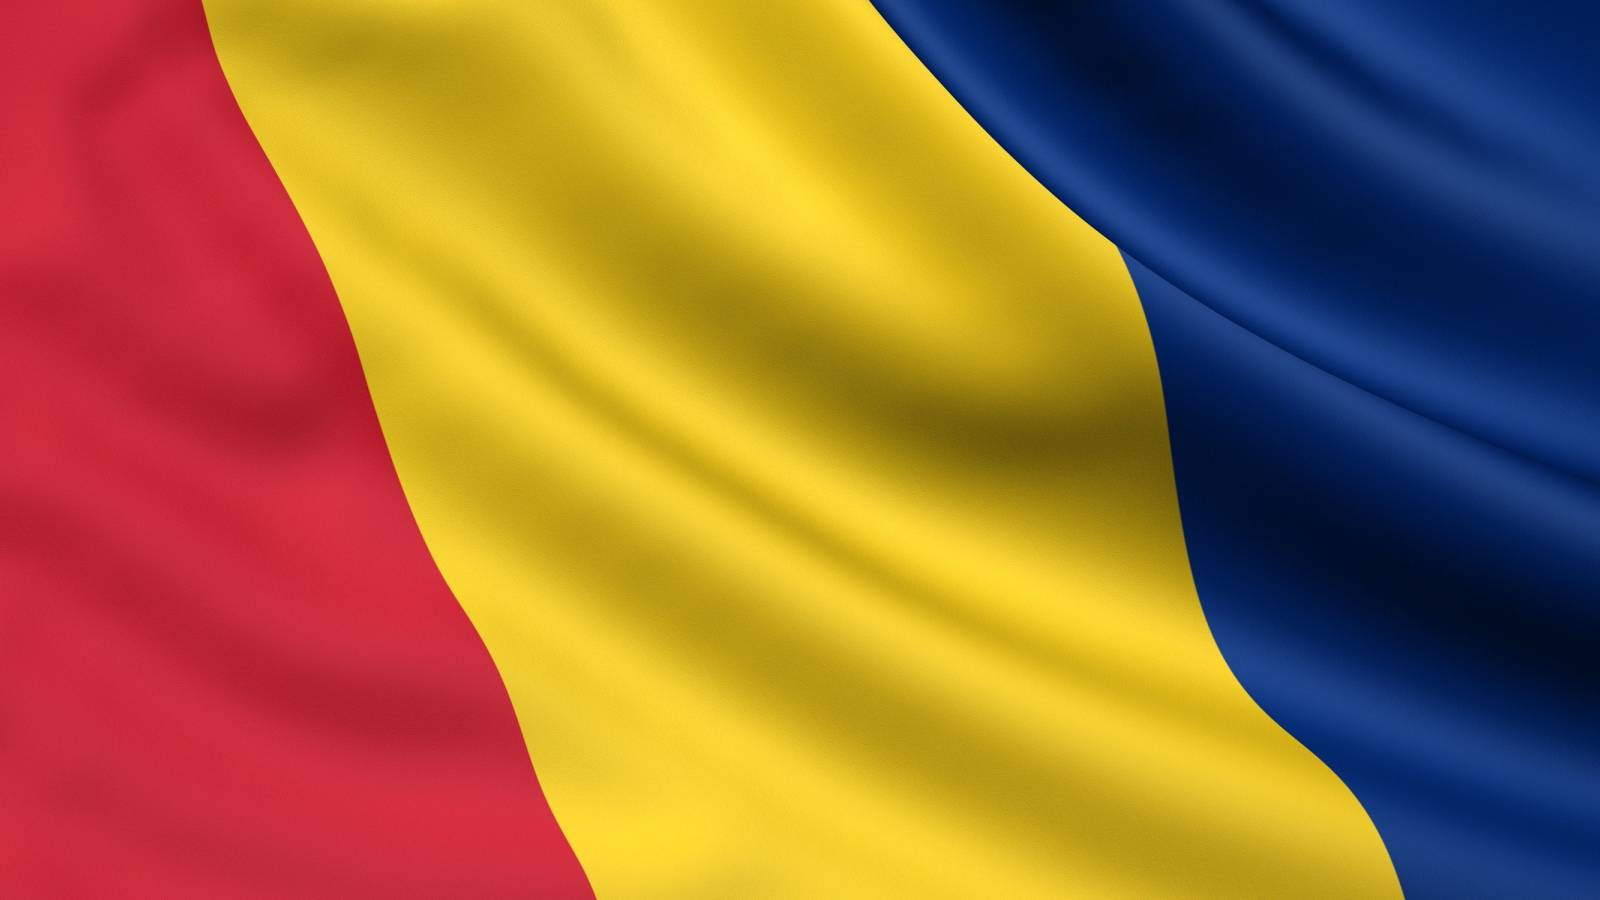 COVID Judetele Romania cele Multe Infectari Ultima Saptamana